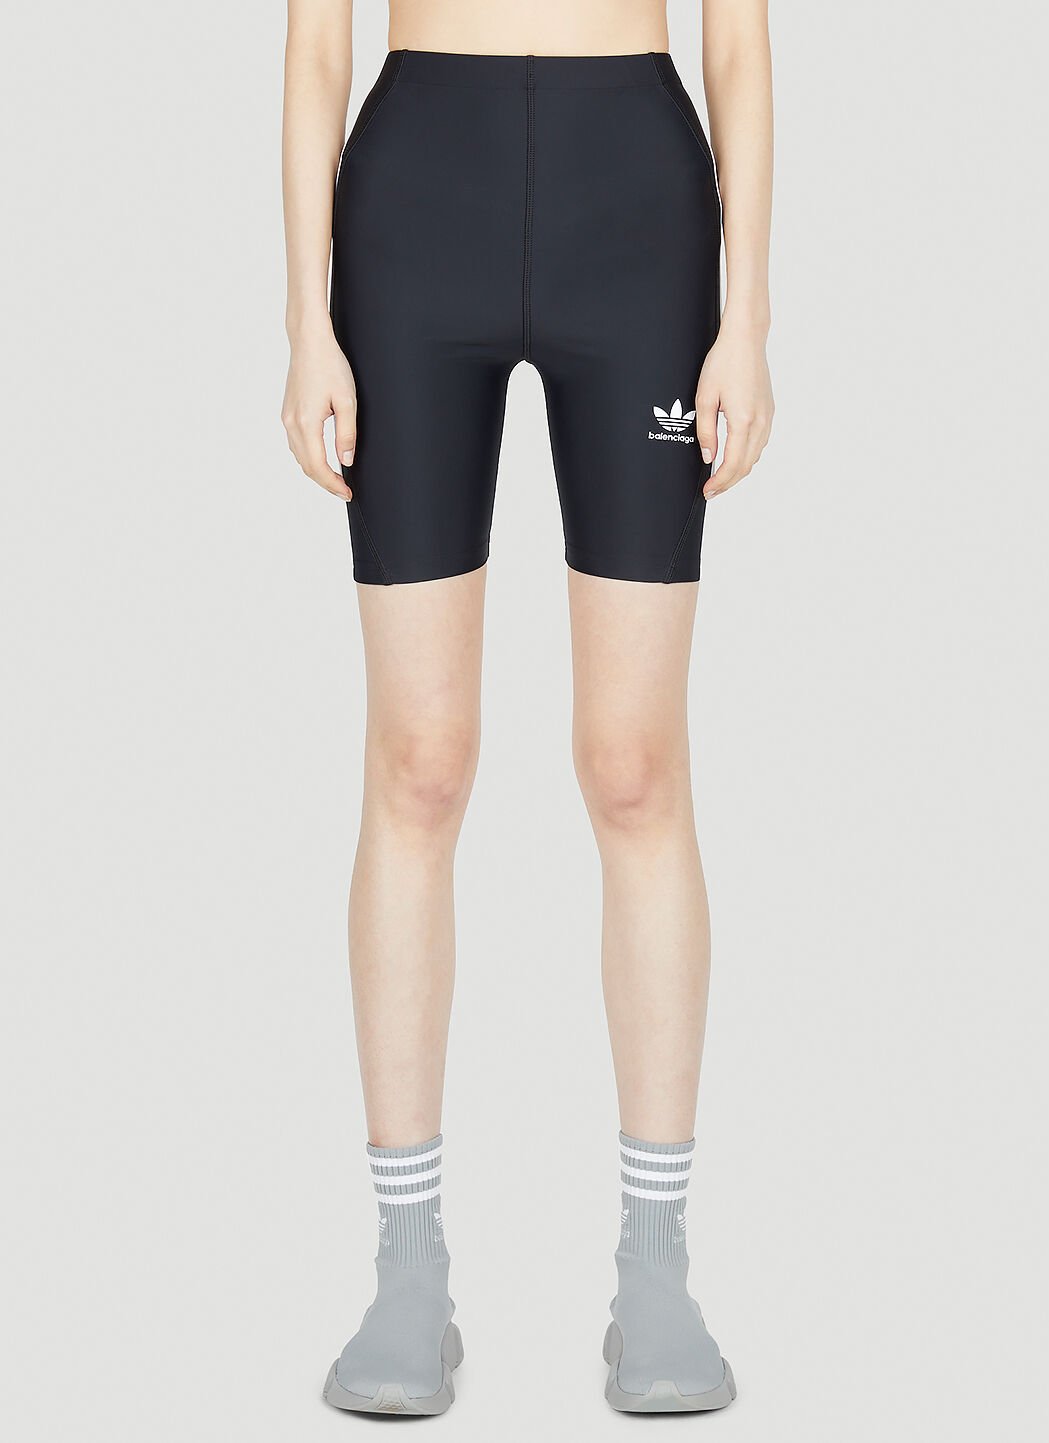 Balenciaga x adidas Striped Cycling Shorts Black axb0251006